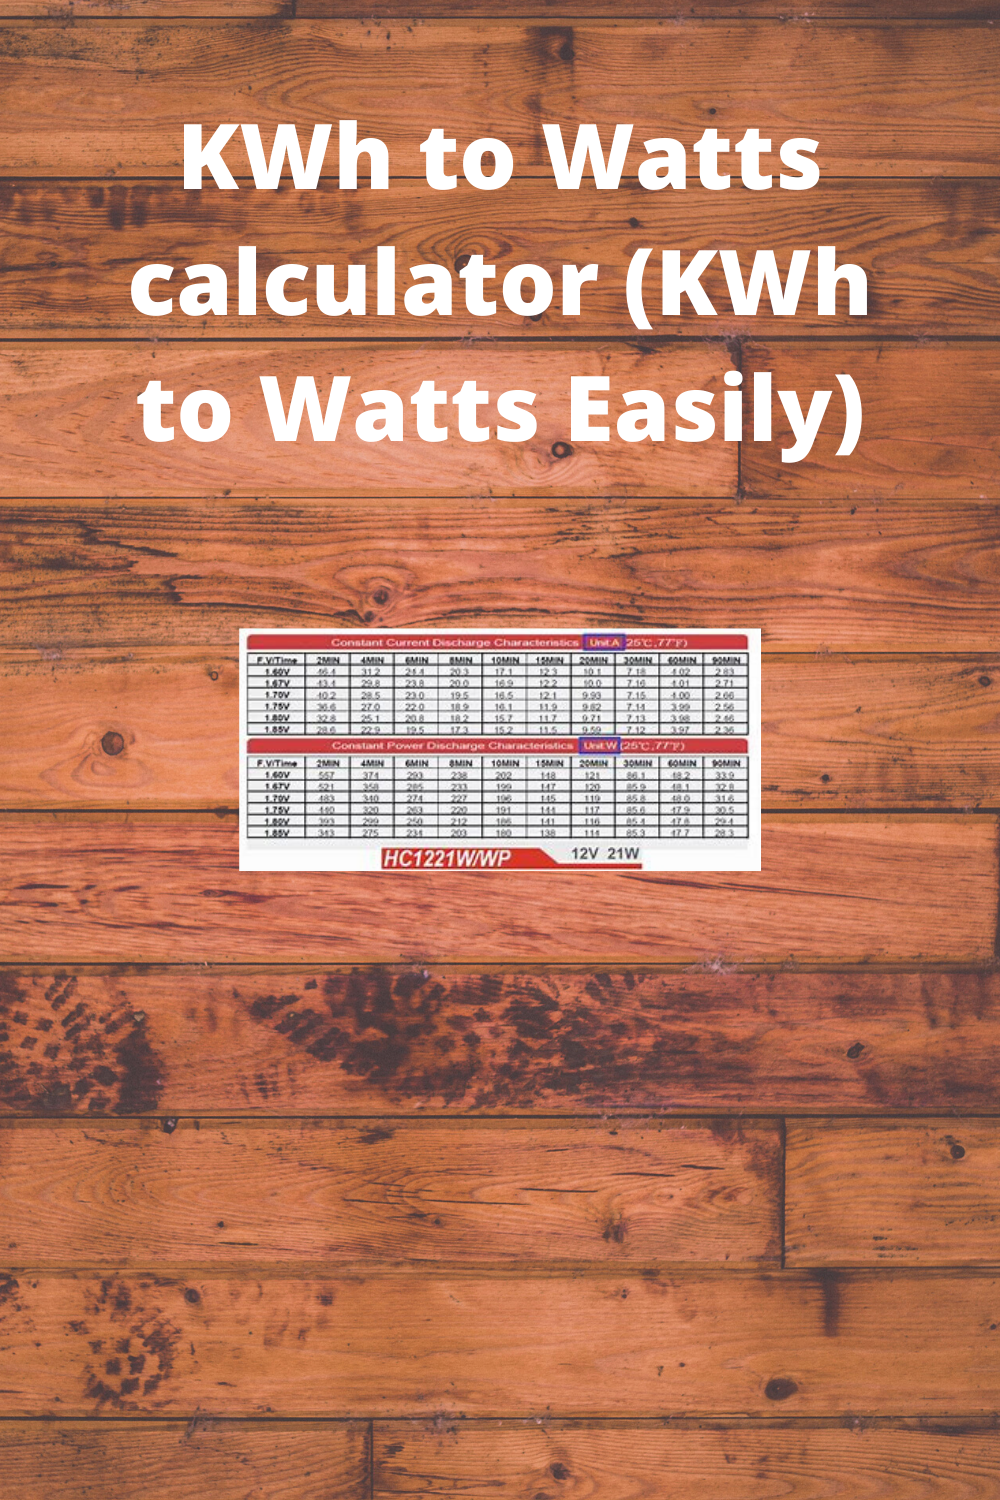 kwh-to-watts-calculator-kwh-to-watts-easily-easy-rapid-calcs